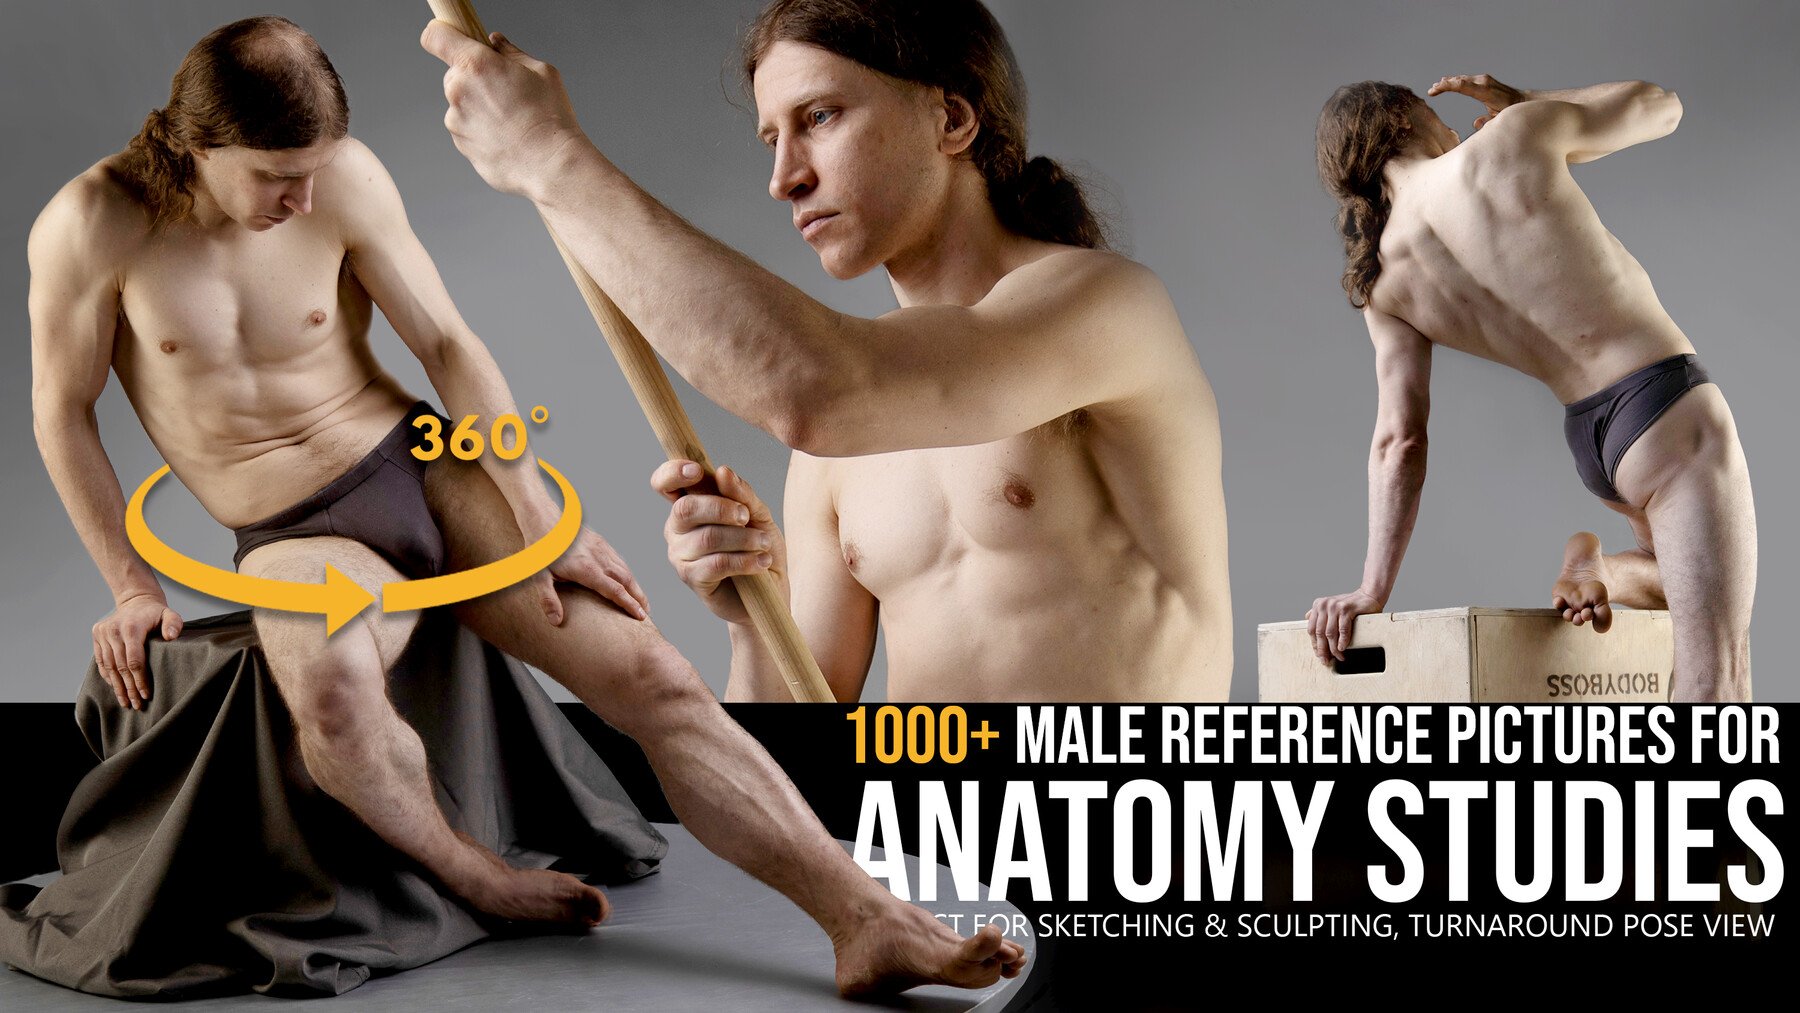 1000+ Turnaround Male References for Anatomy Studies